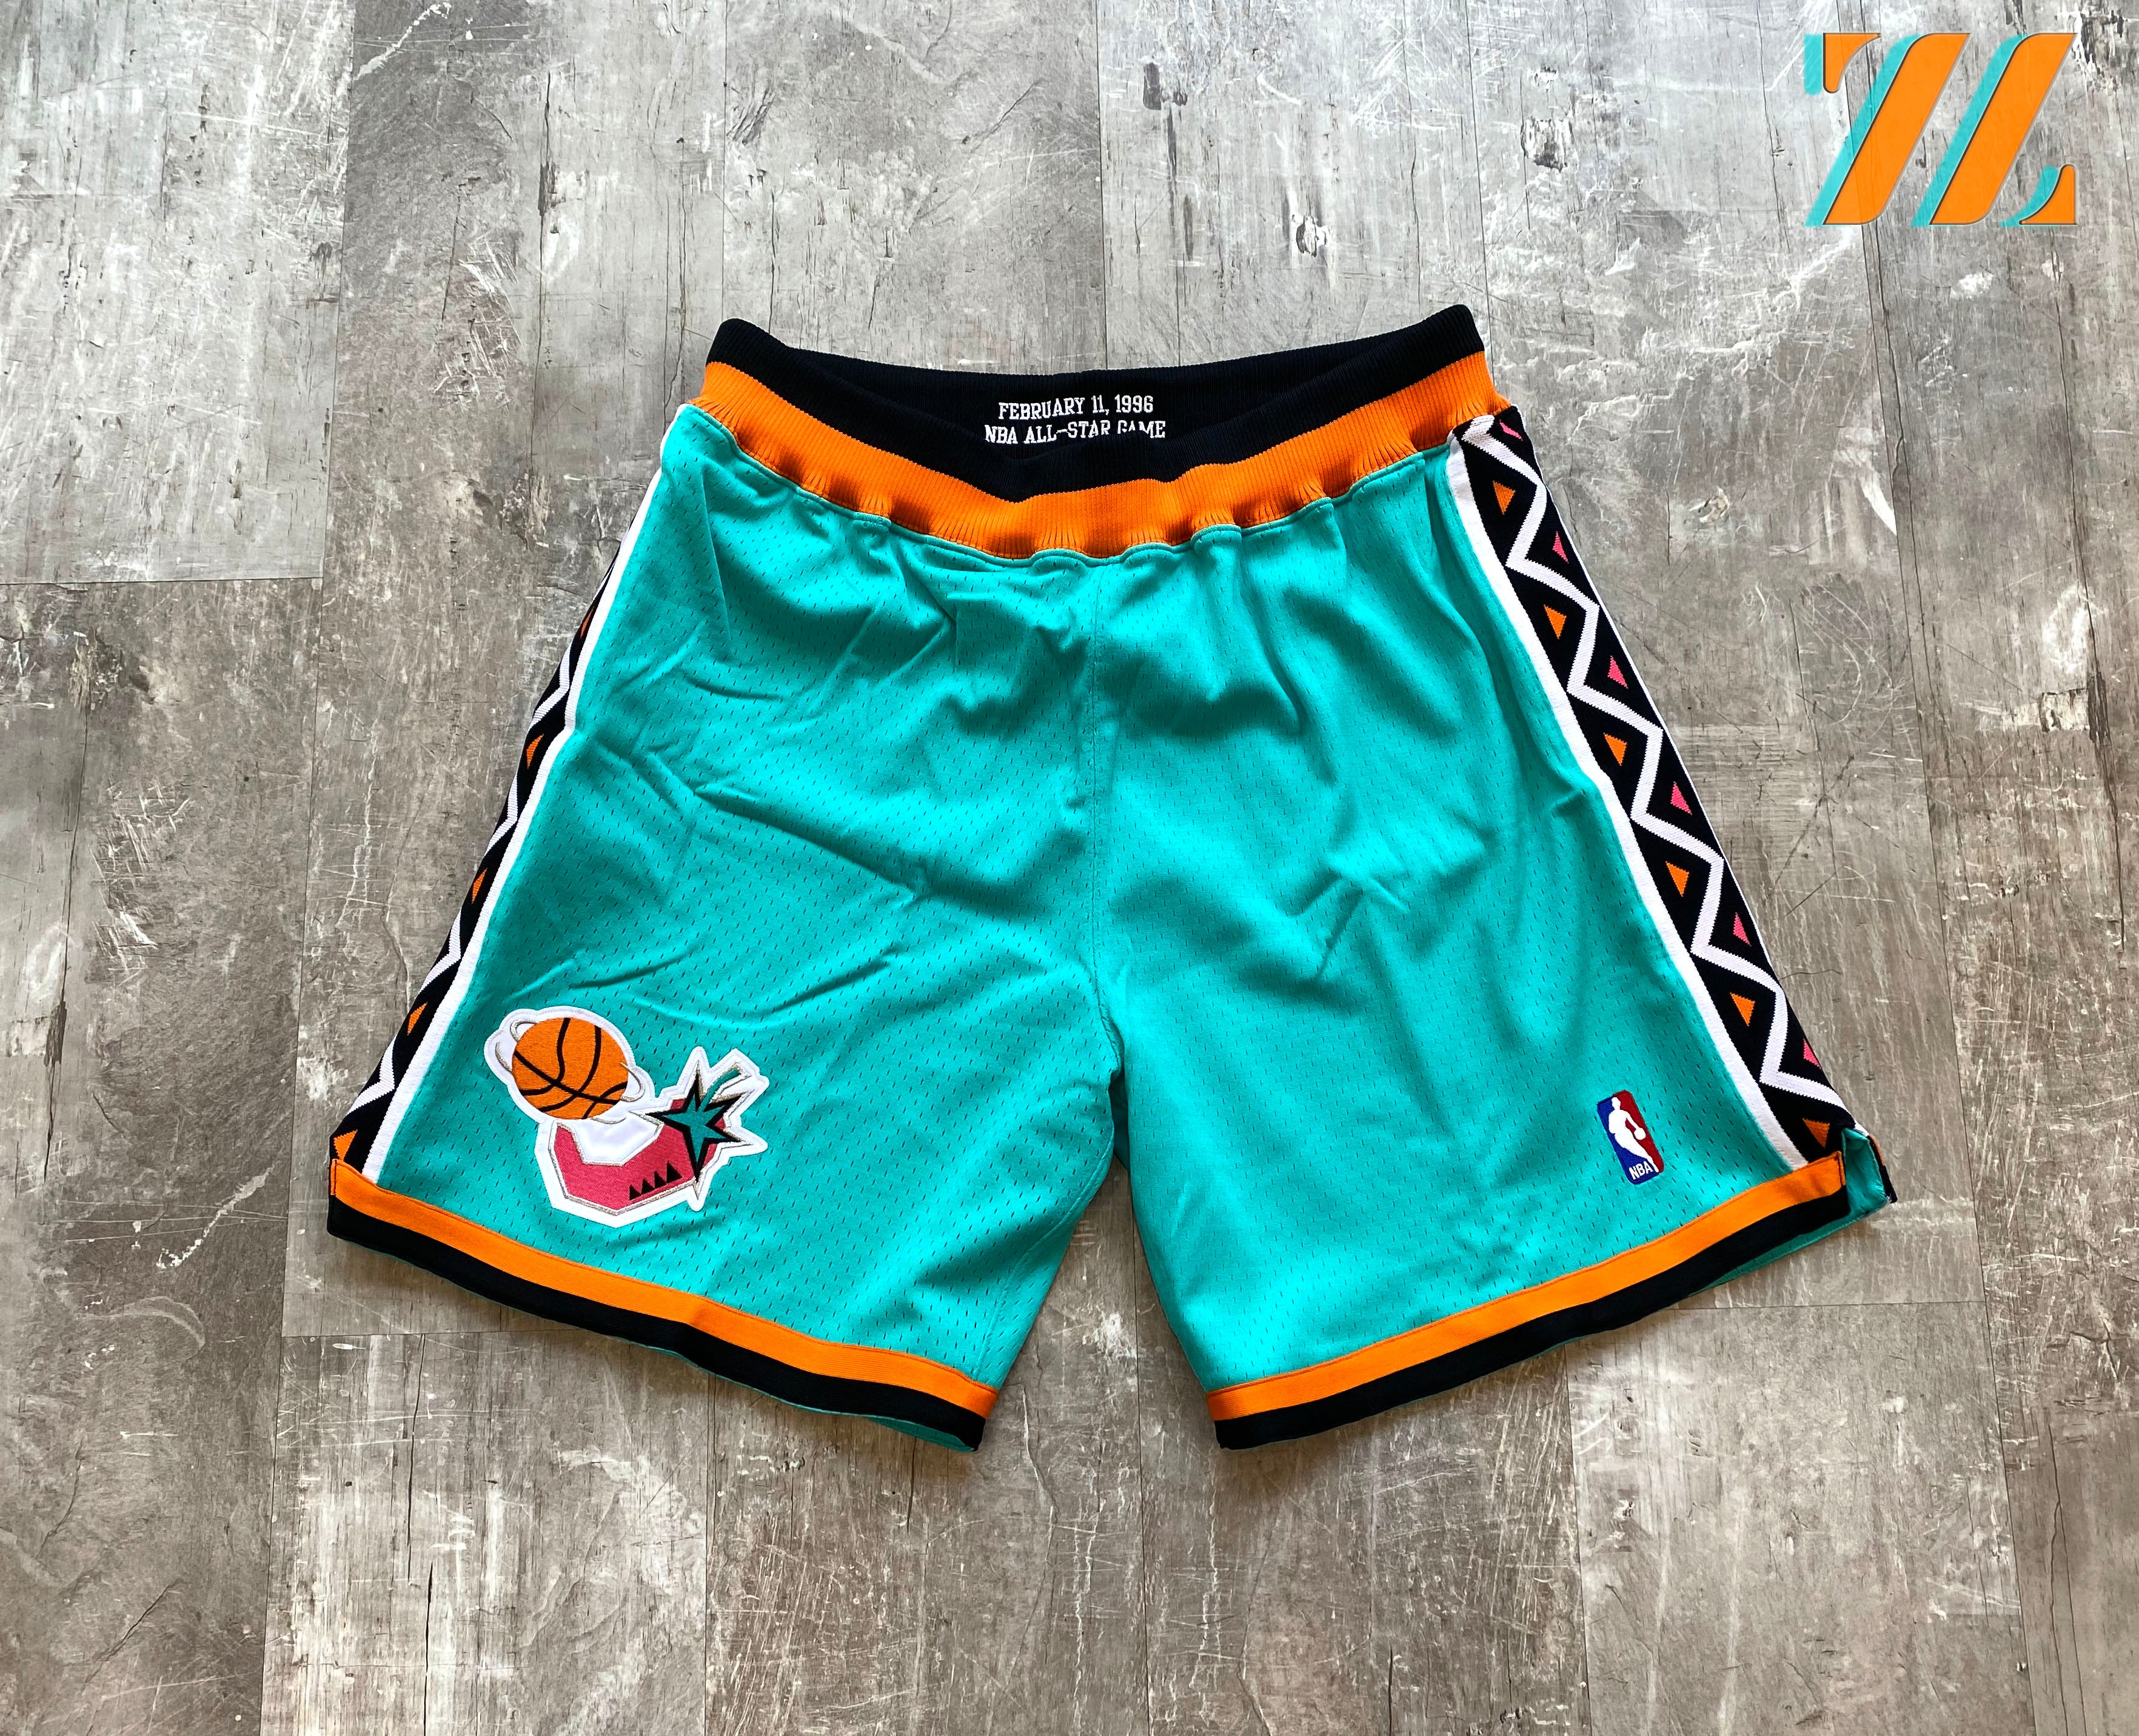 nba all star shorts 1996